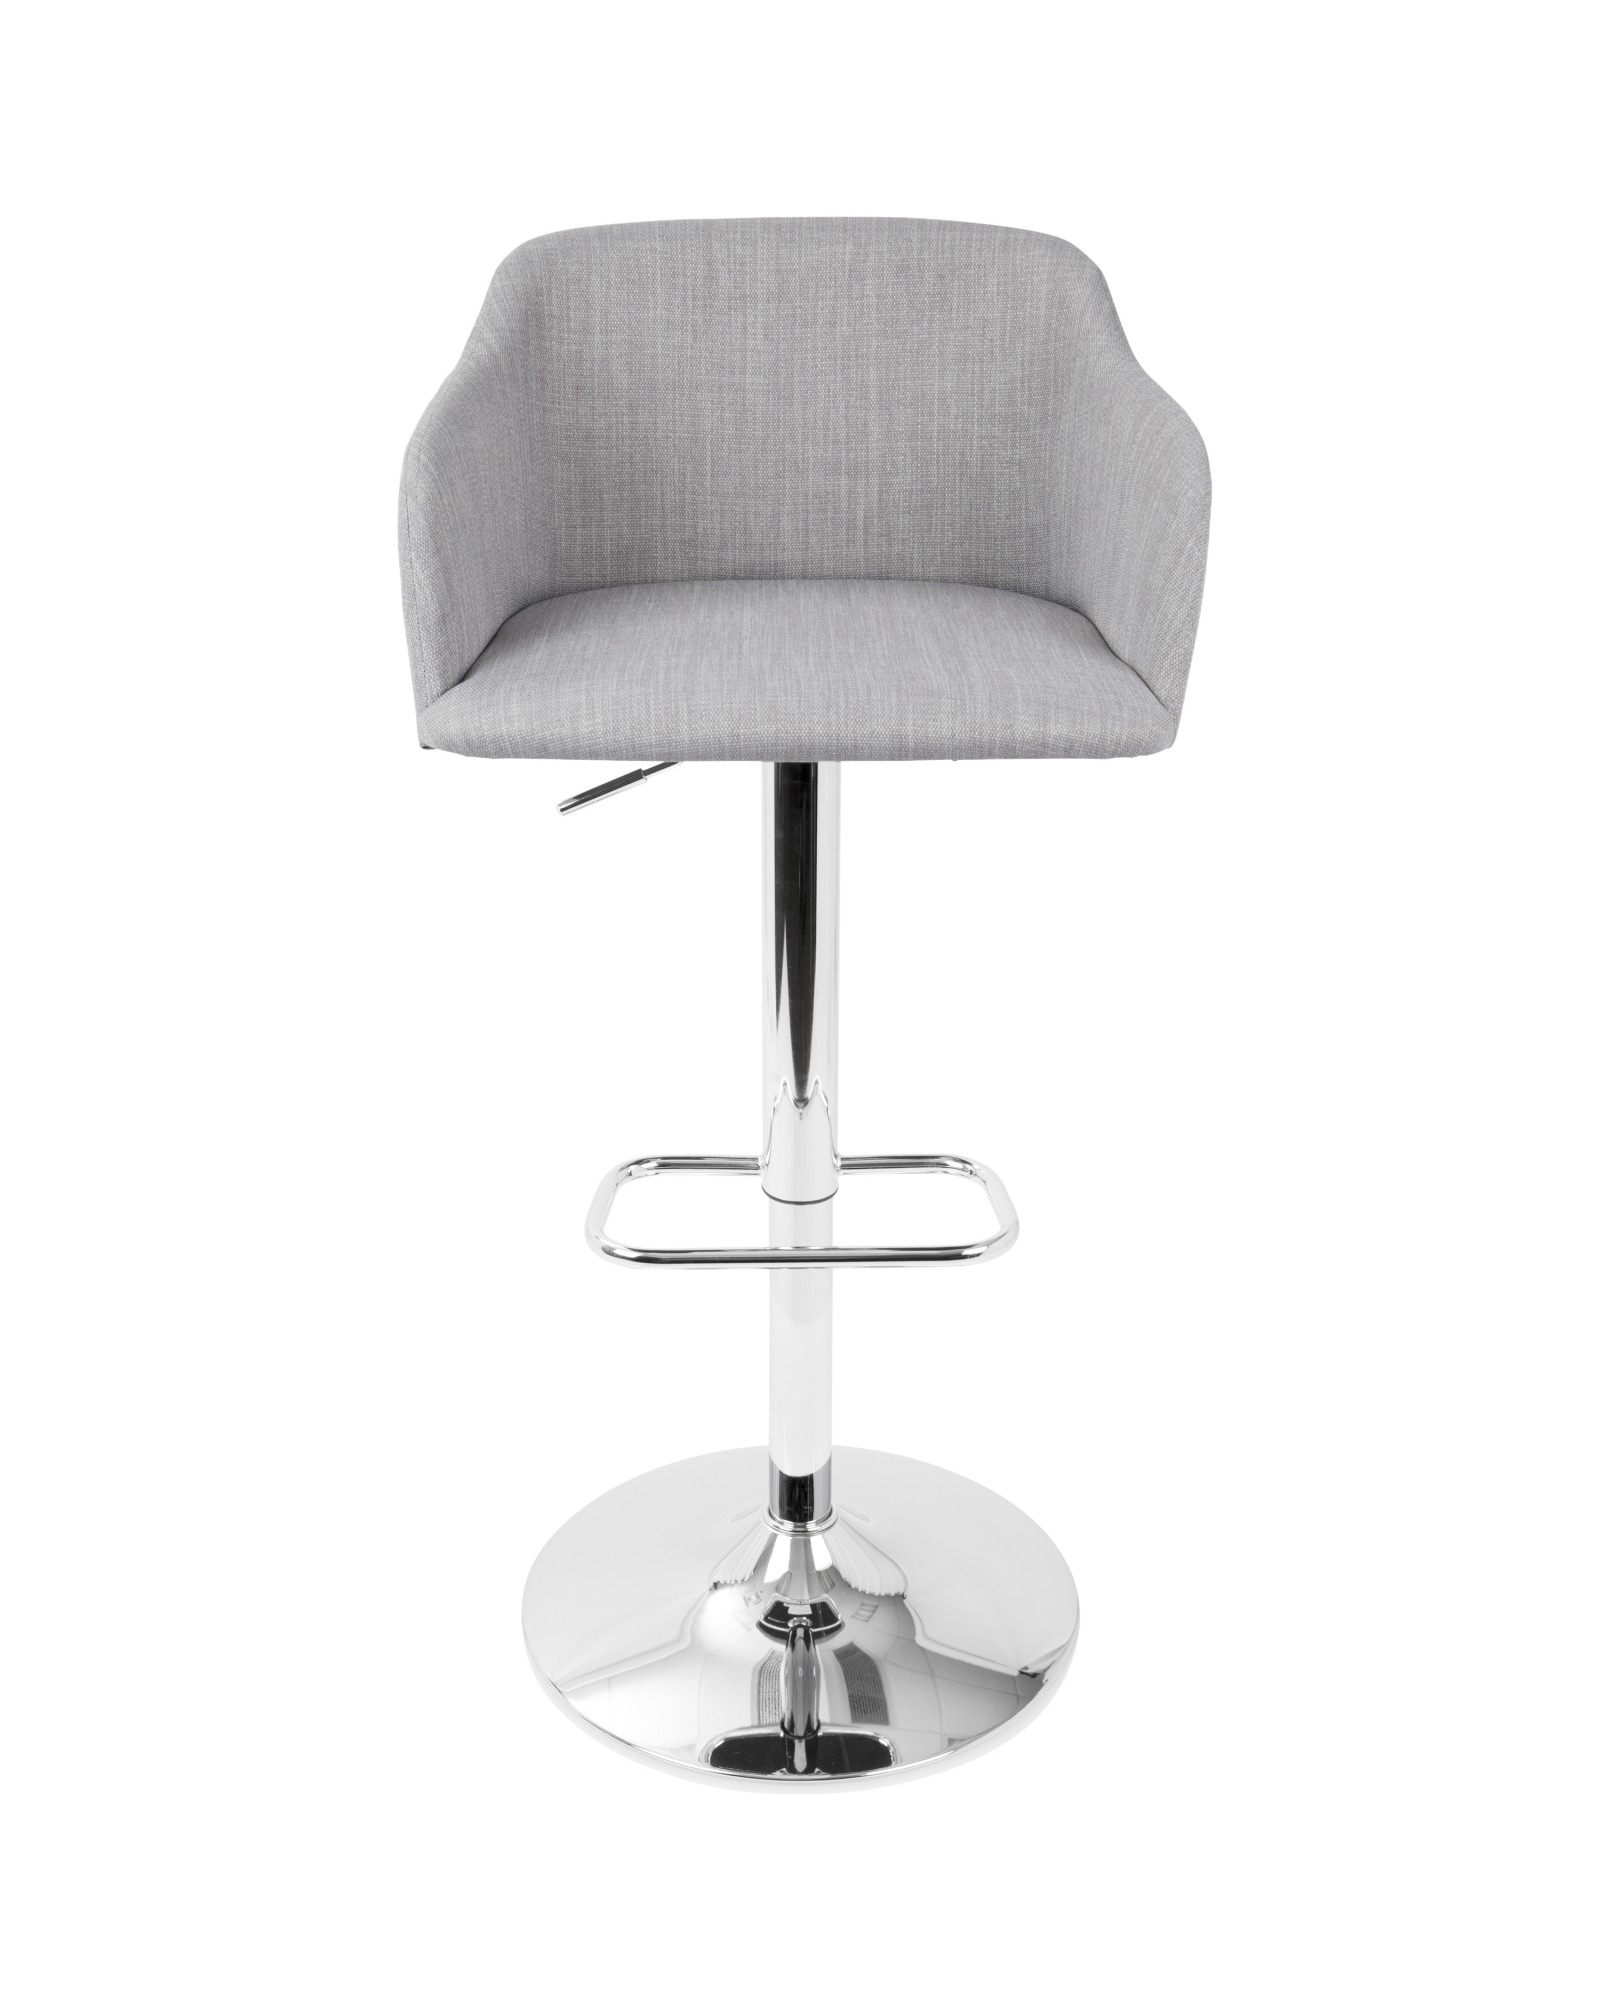 Daniella Contemporary Adjustable Barstool with Swivel in Light Grey